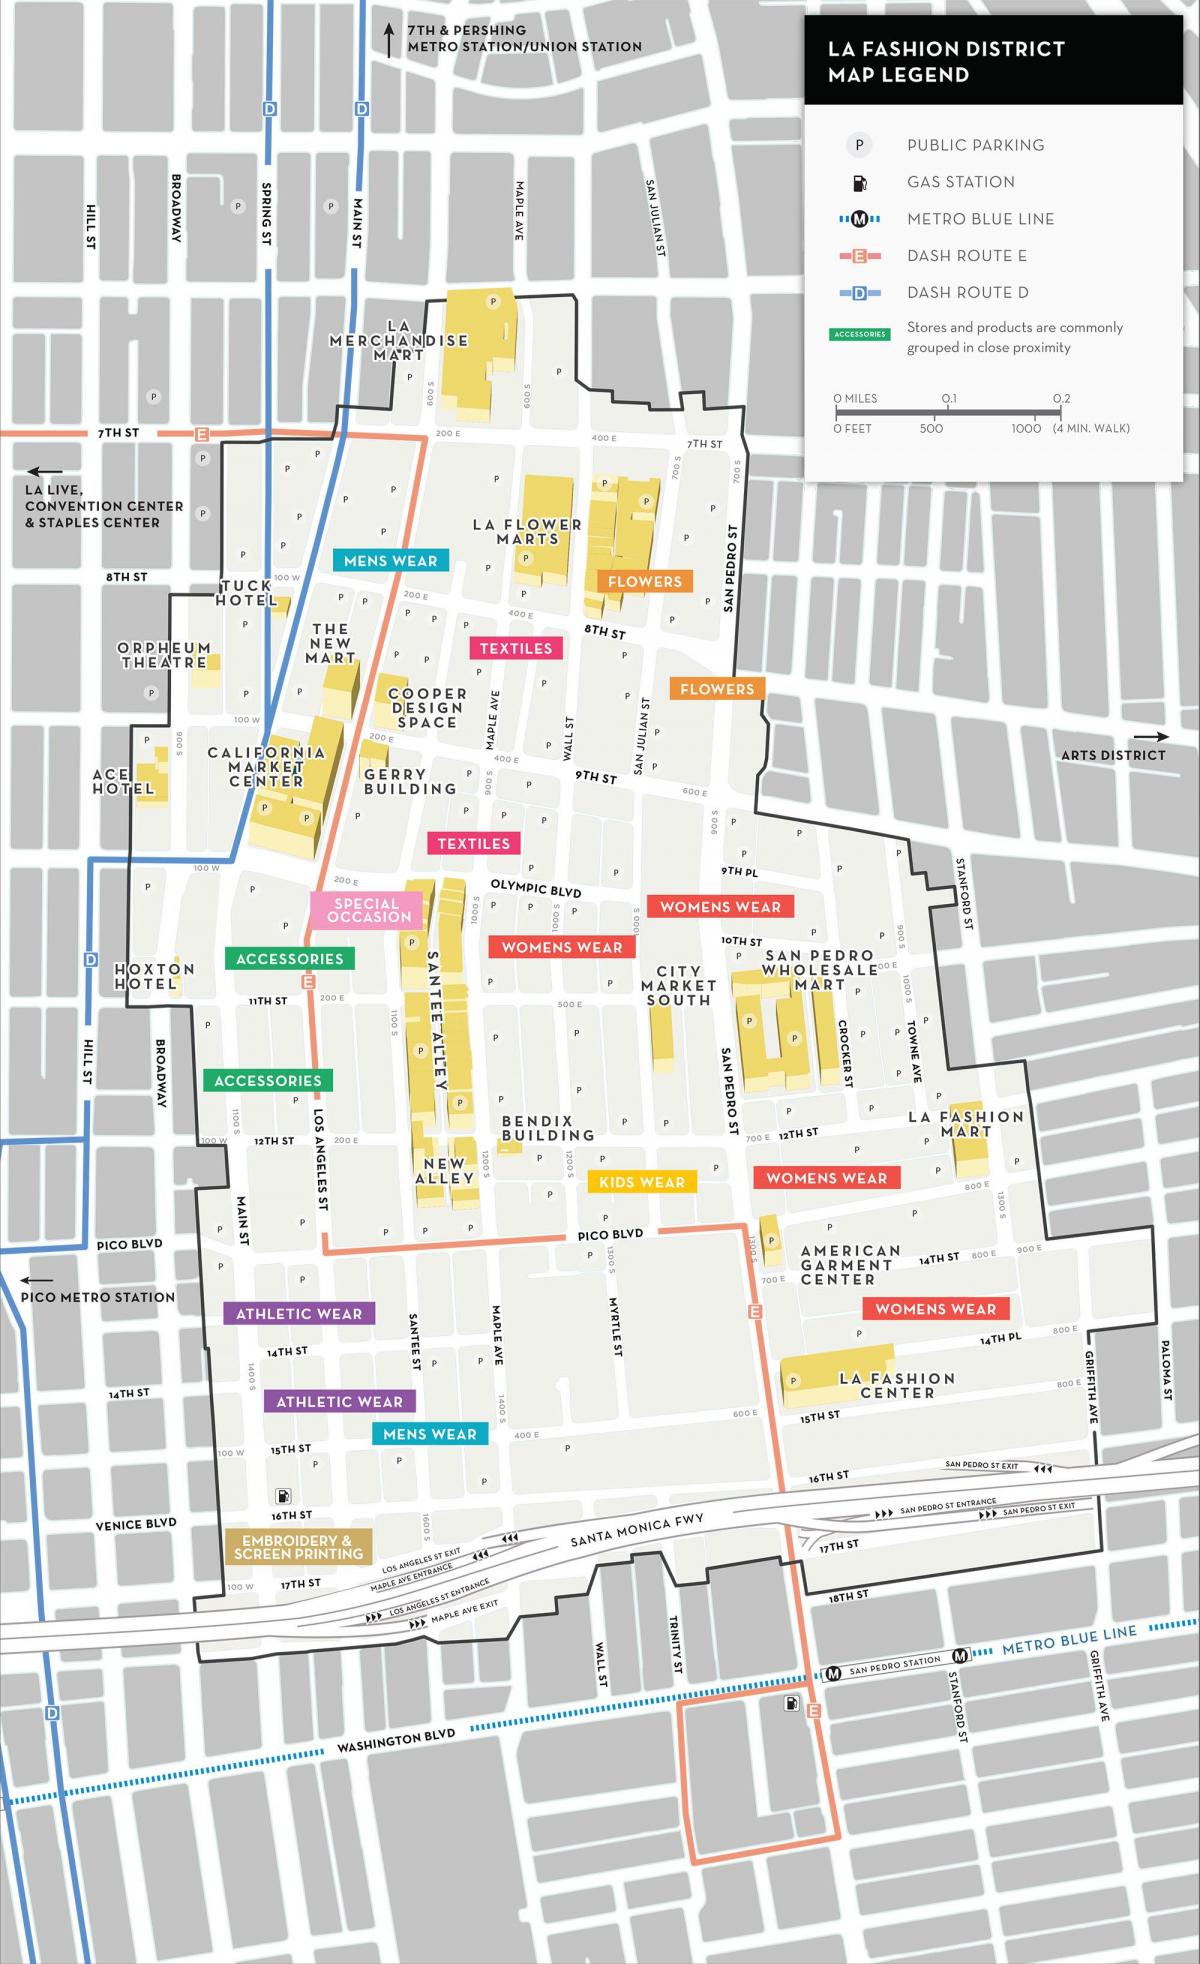 Los Angeles fashion district mappa